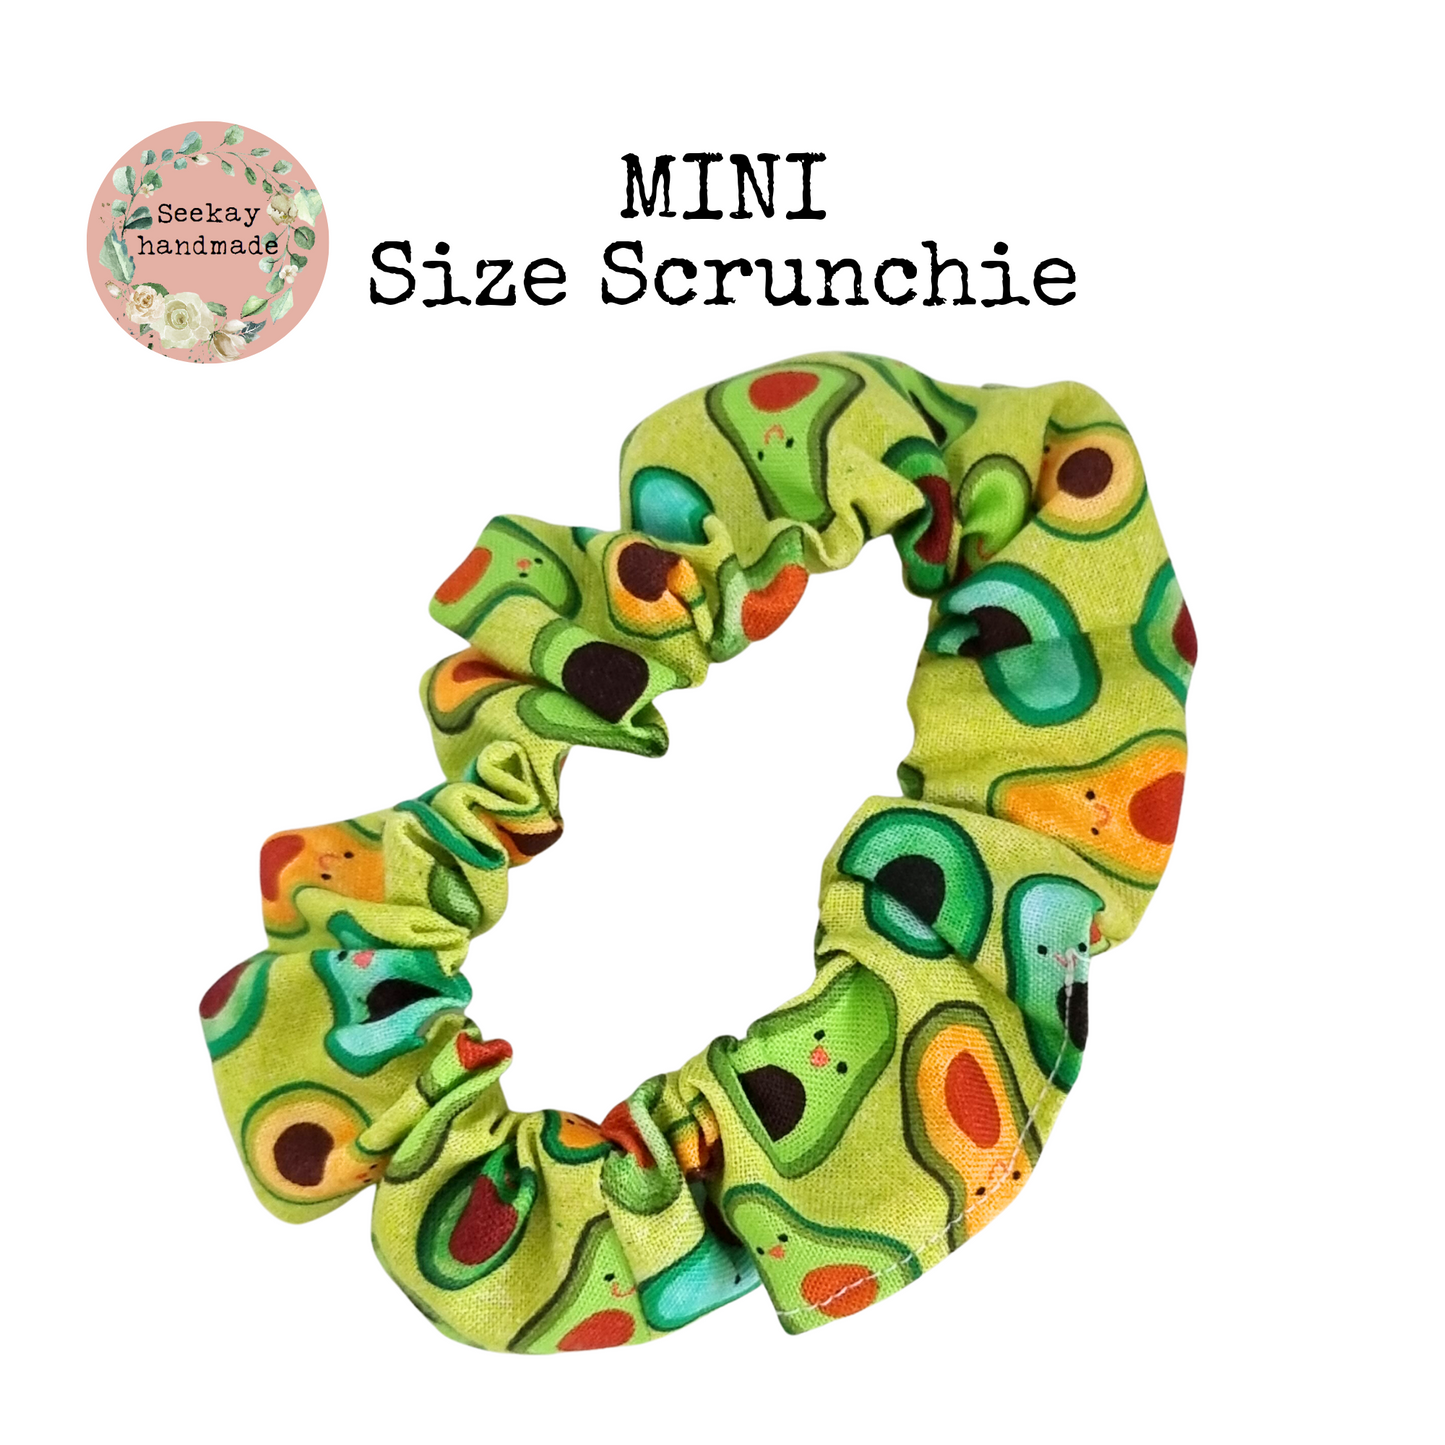 Mini Scrunchie- light green with avocado's